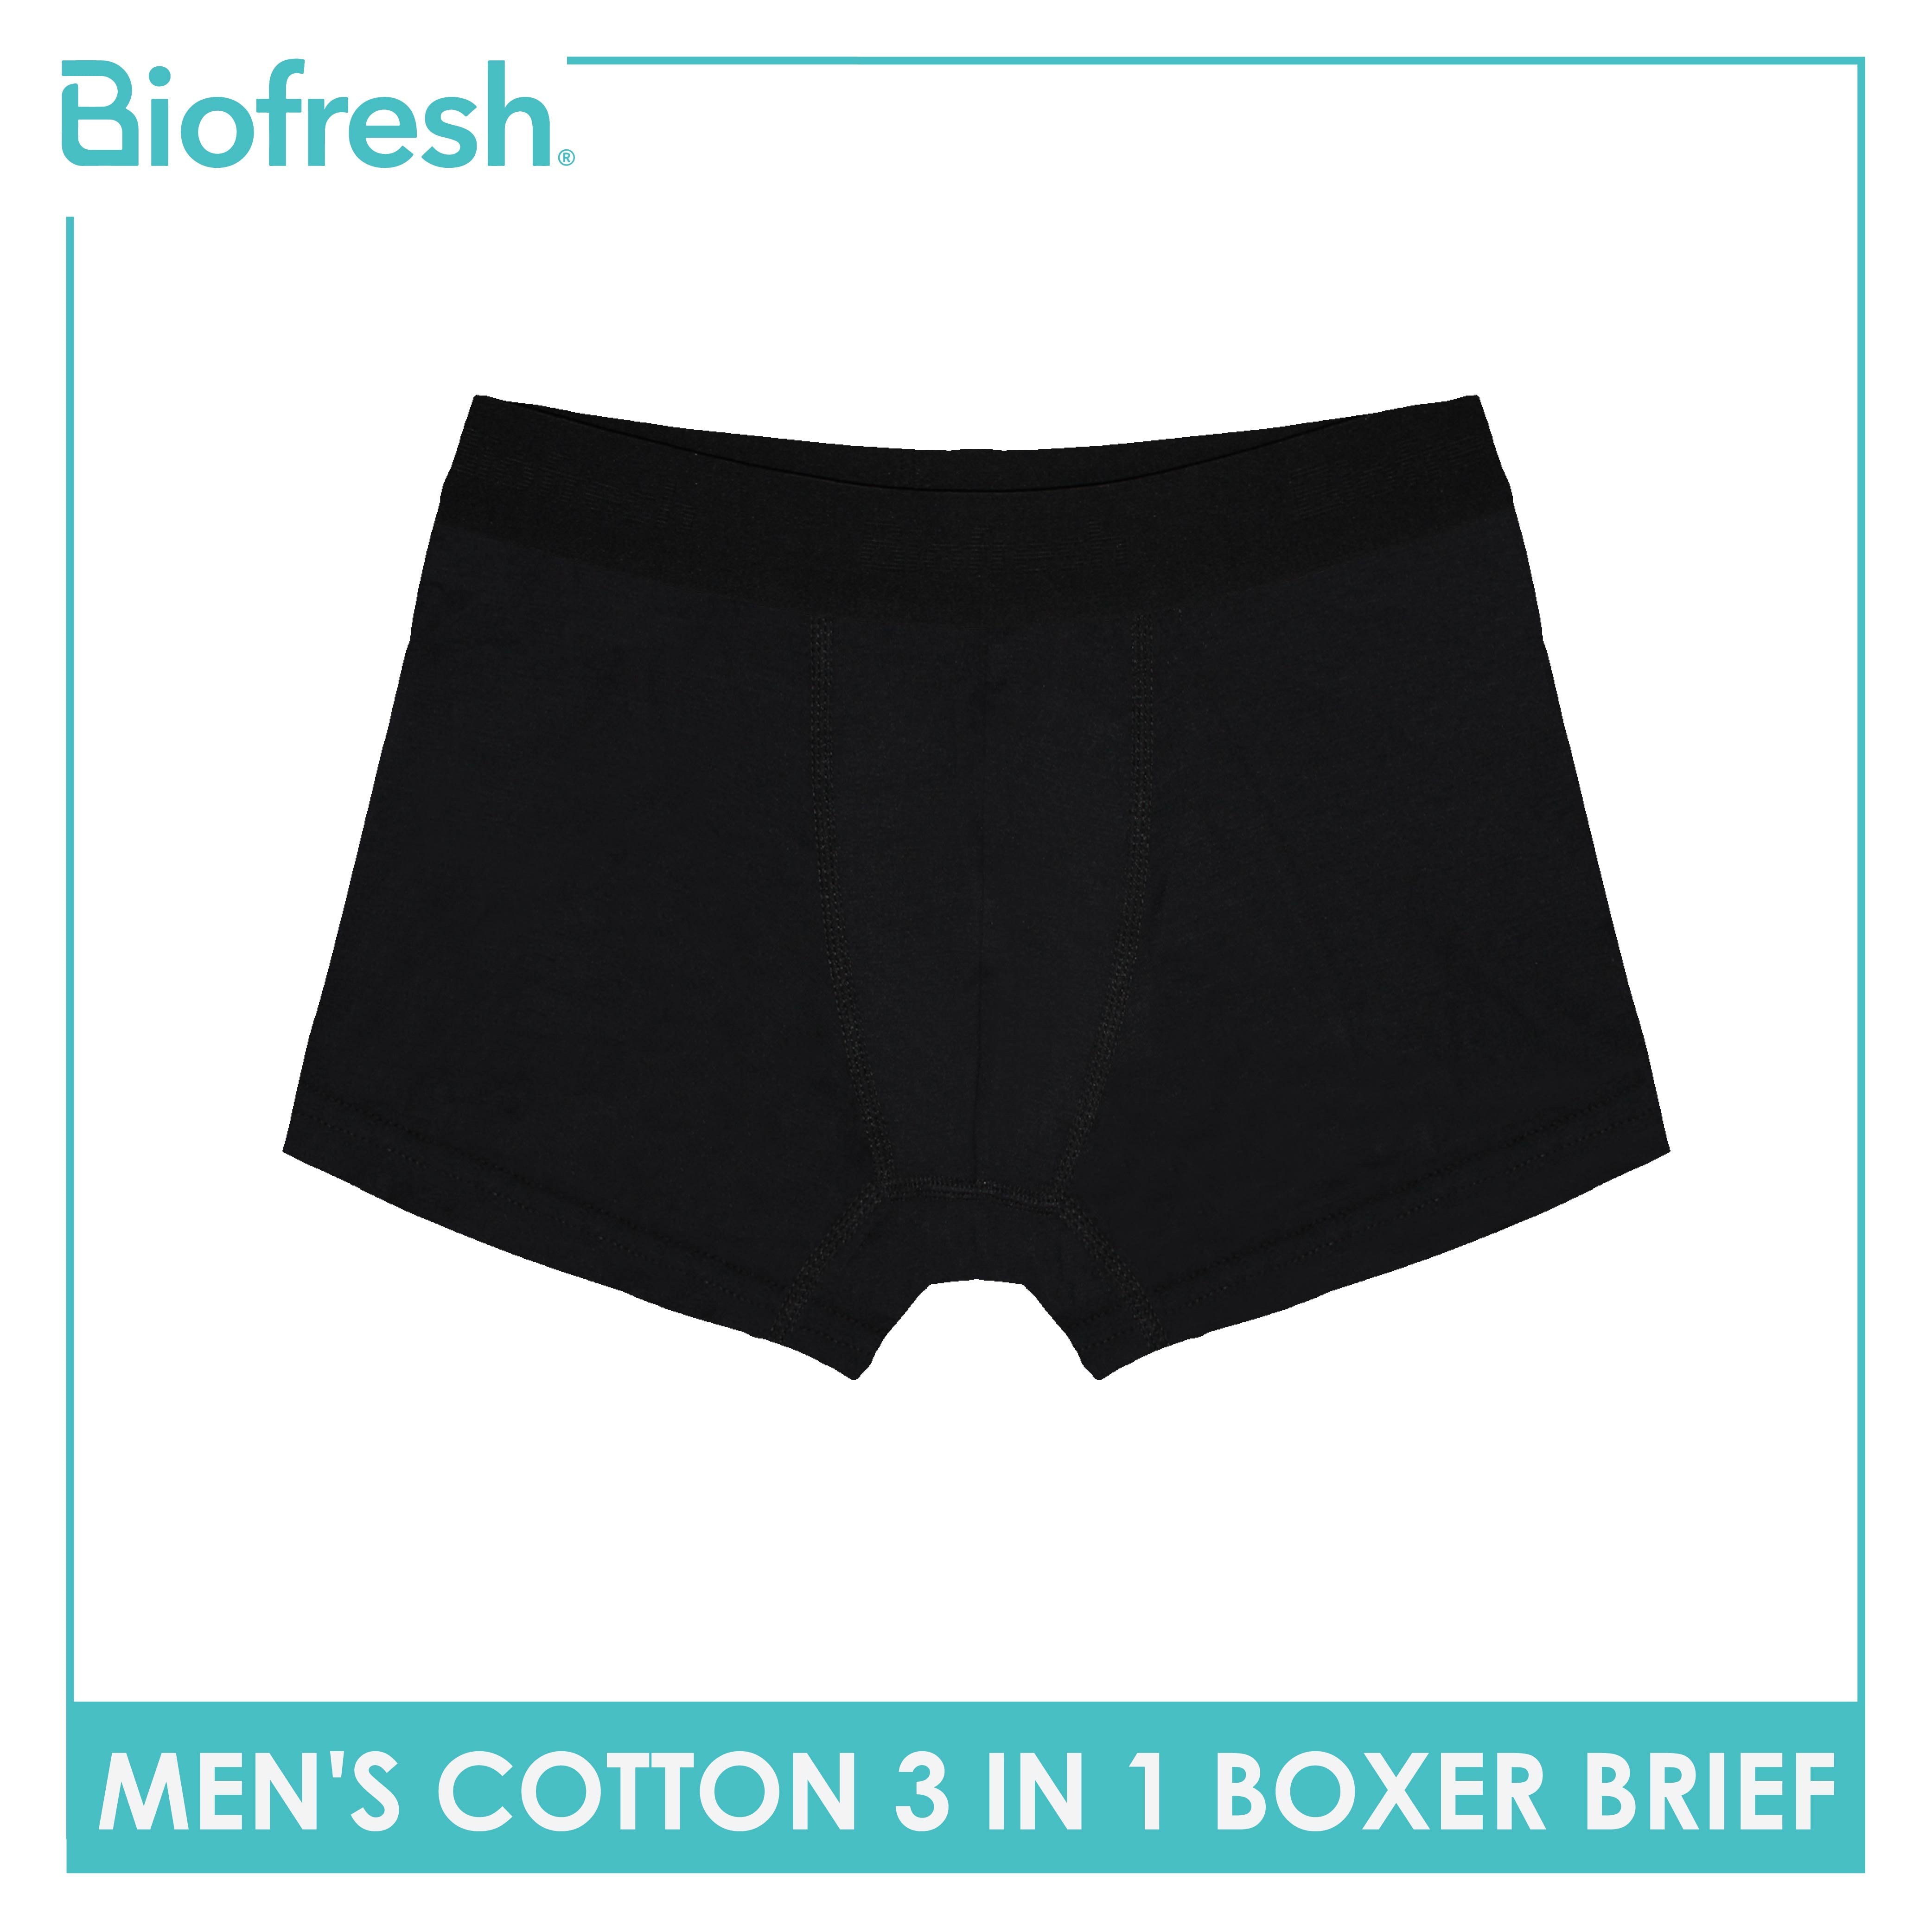 Antimicrobial Cotton Boxer Brief for Men